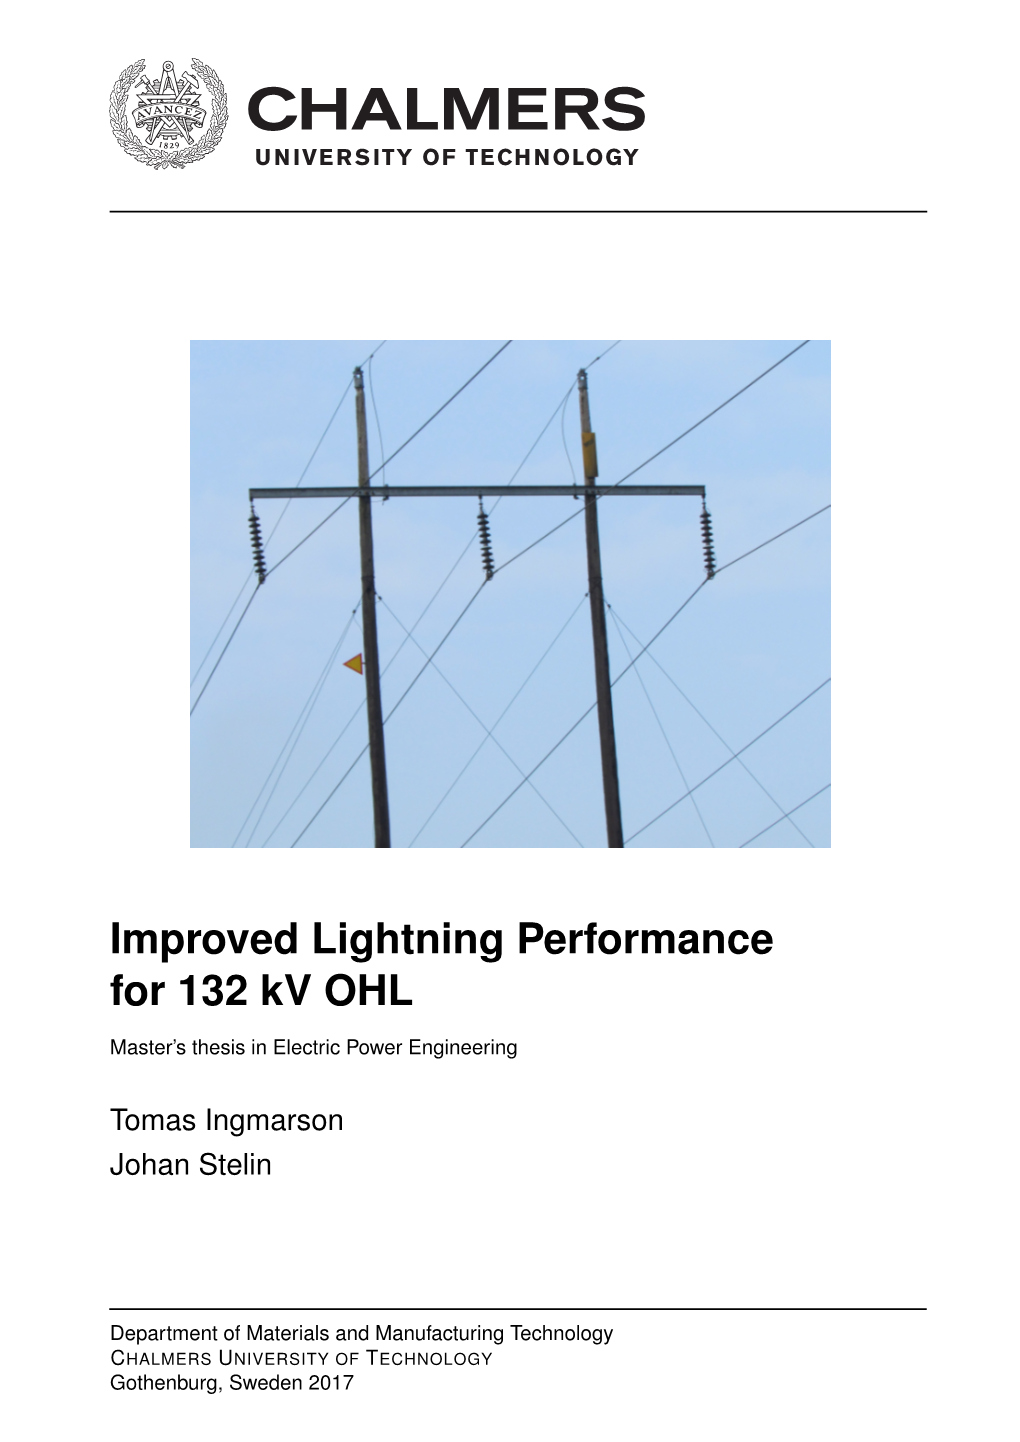 Improved Lightning Performance for 132 Kv OHL